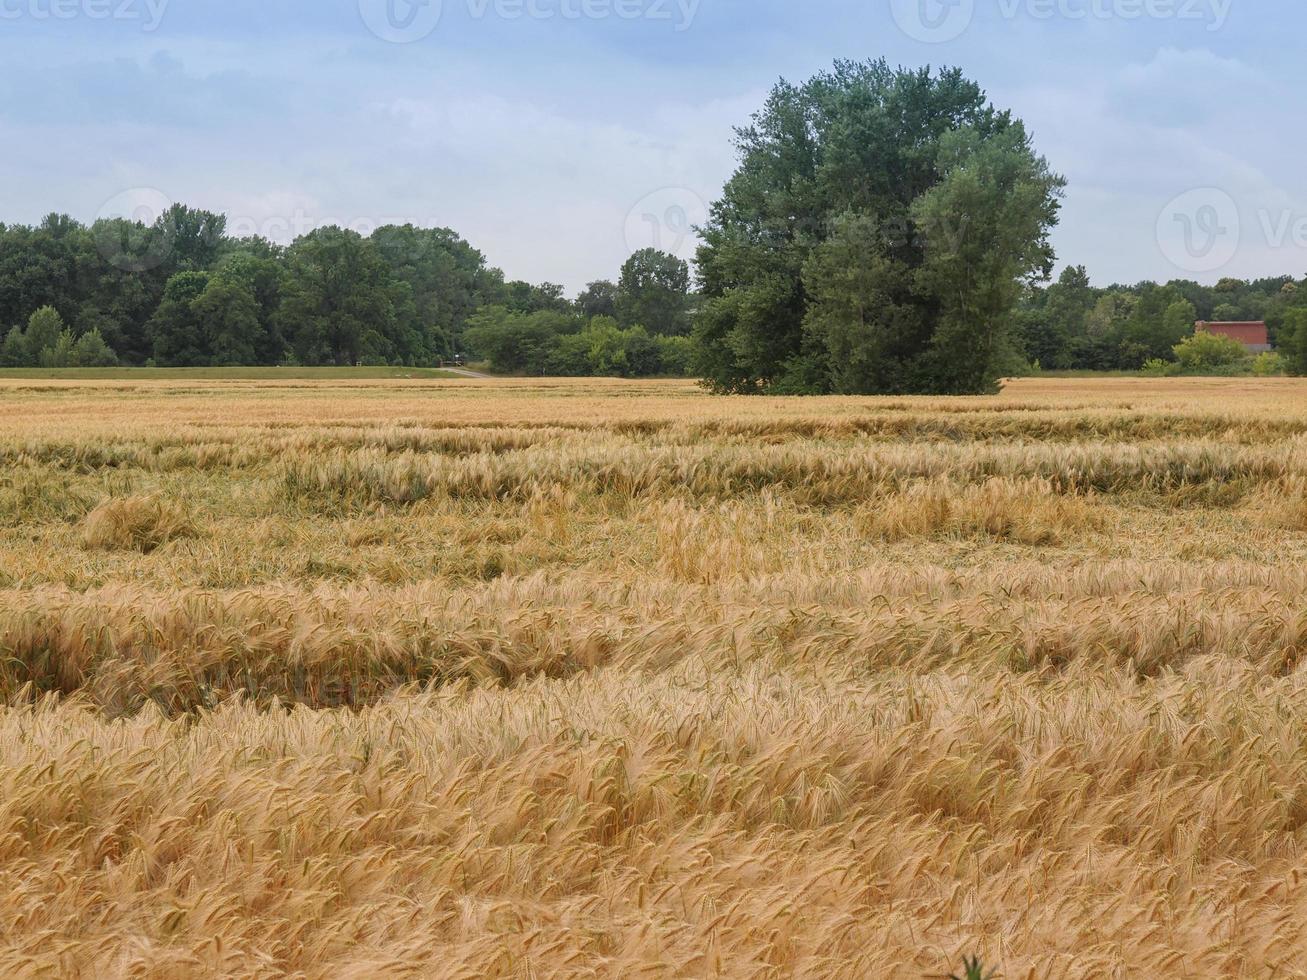 Barleycorn field background photo